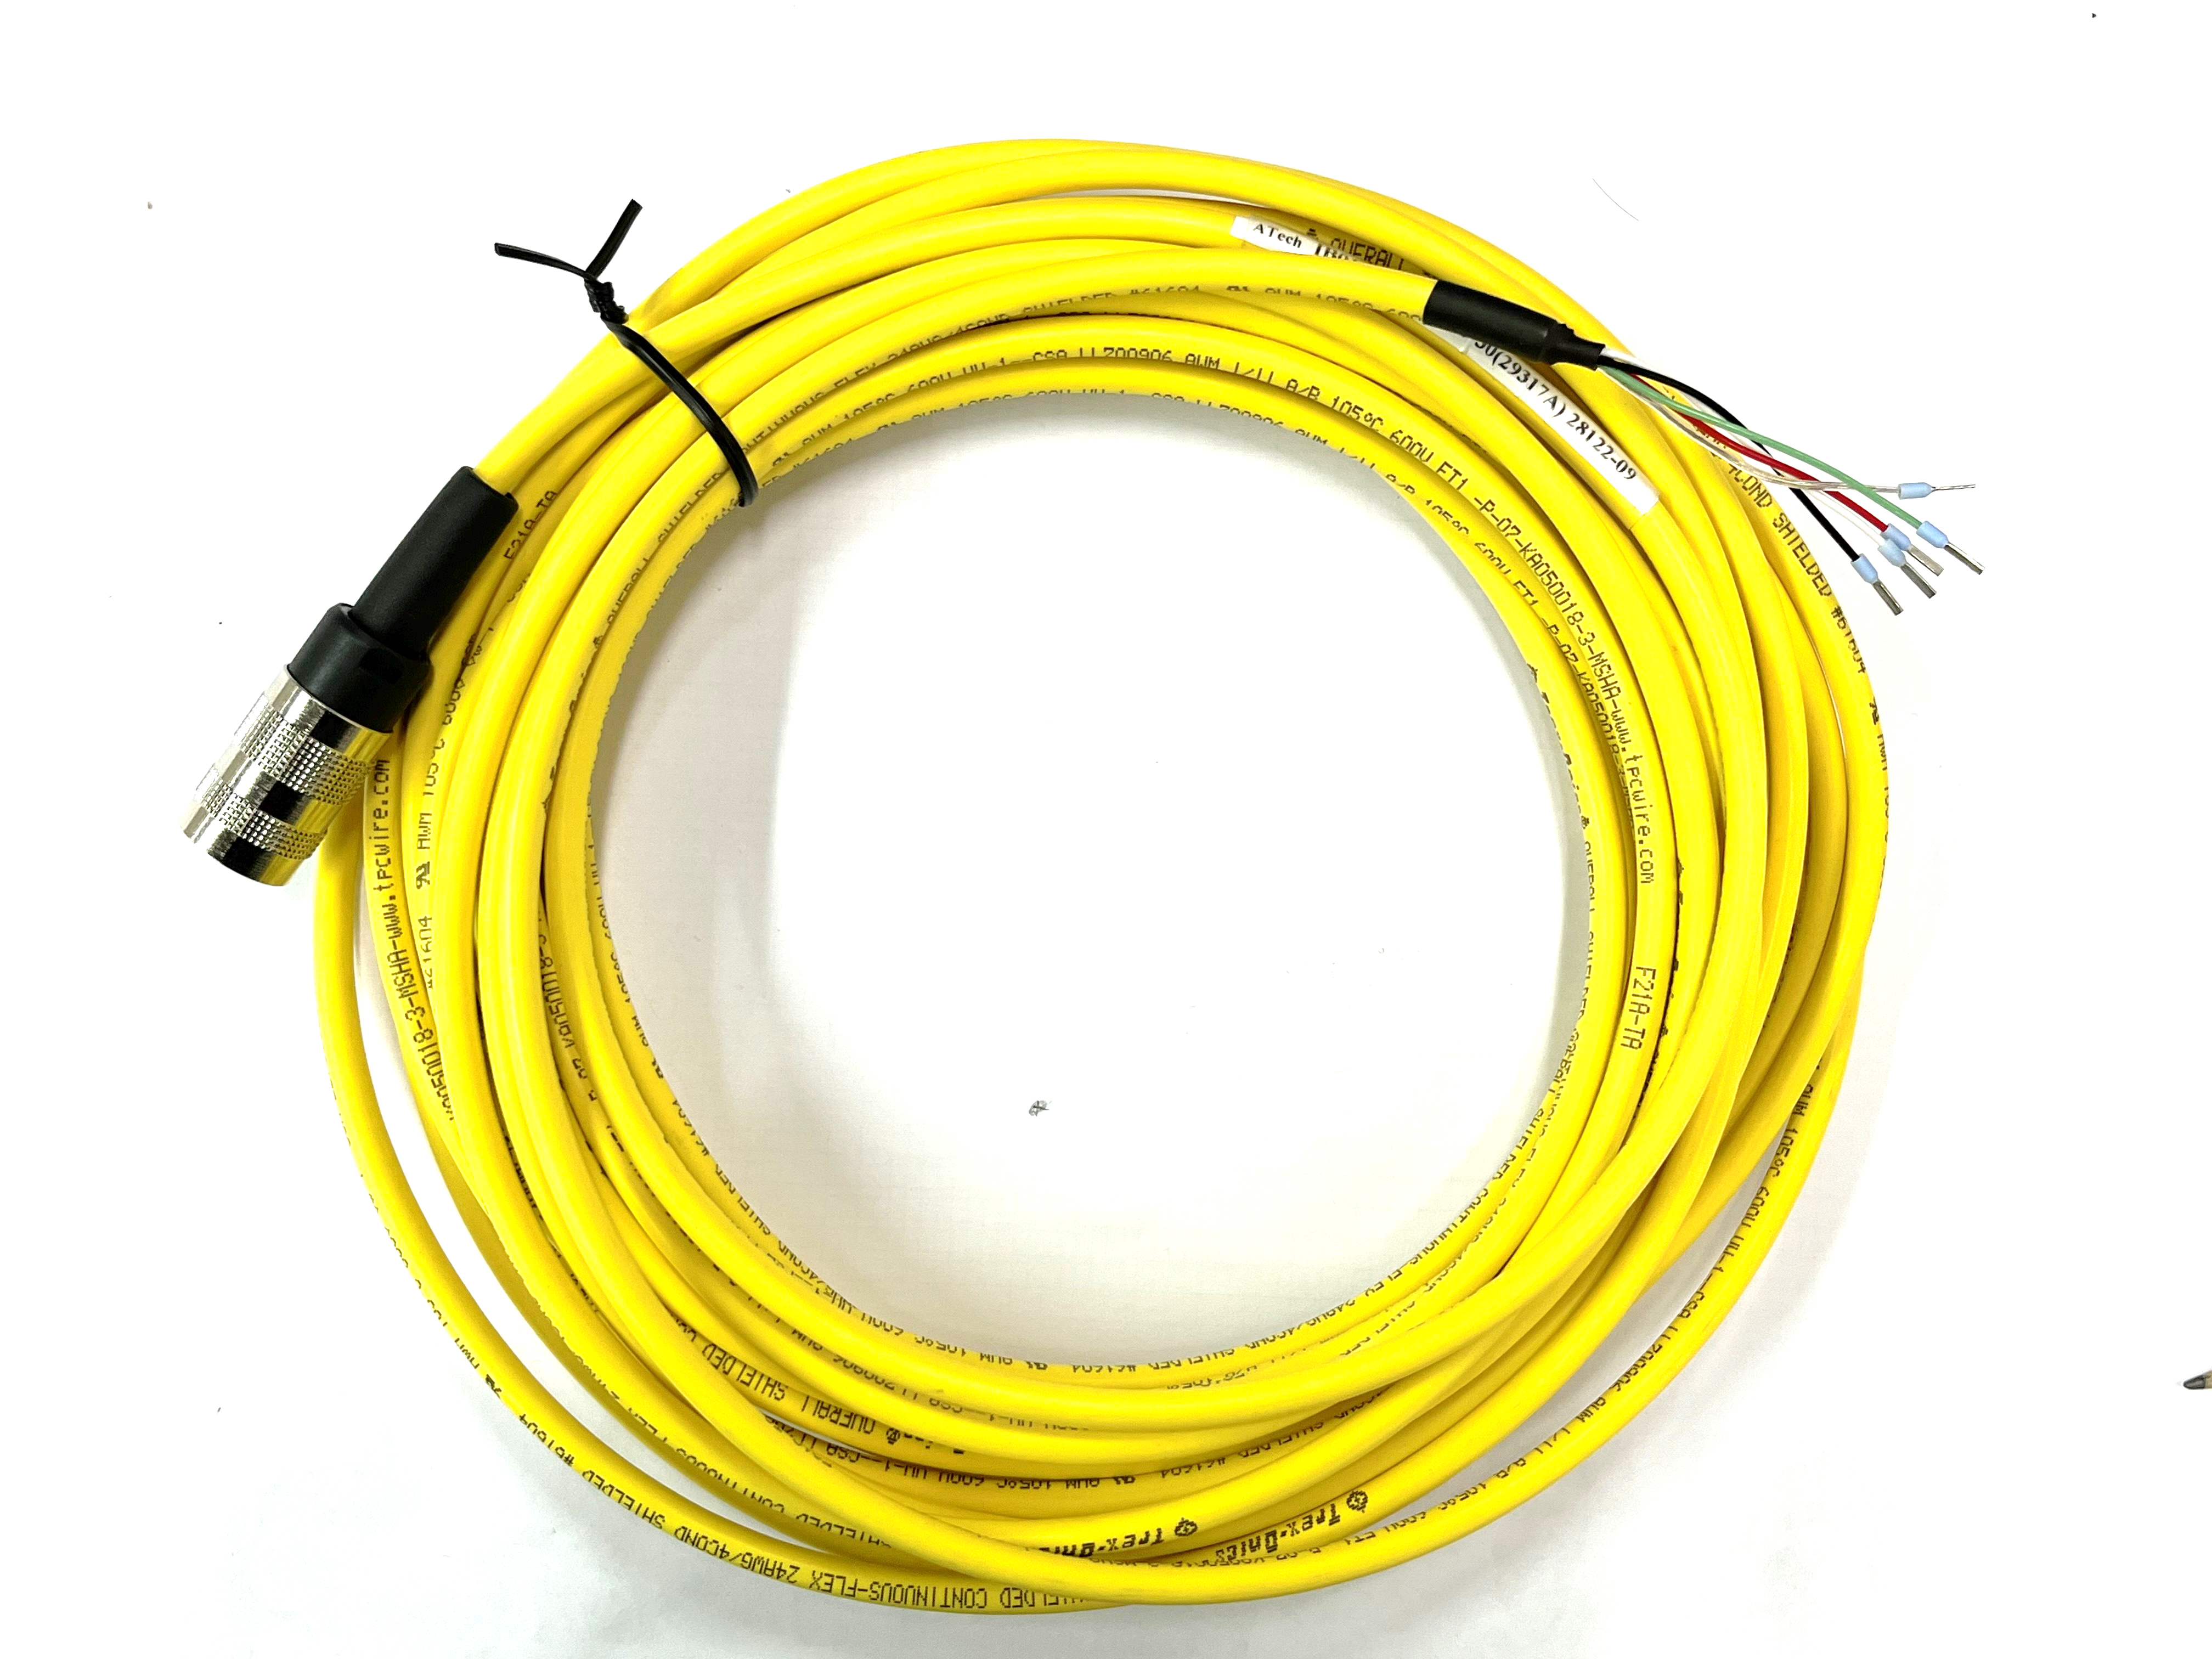 IB011, cable assemblies